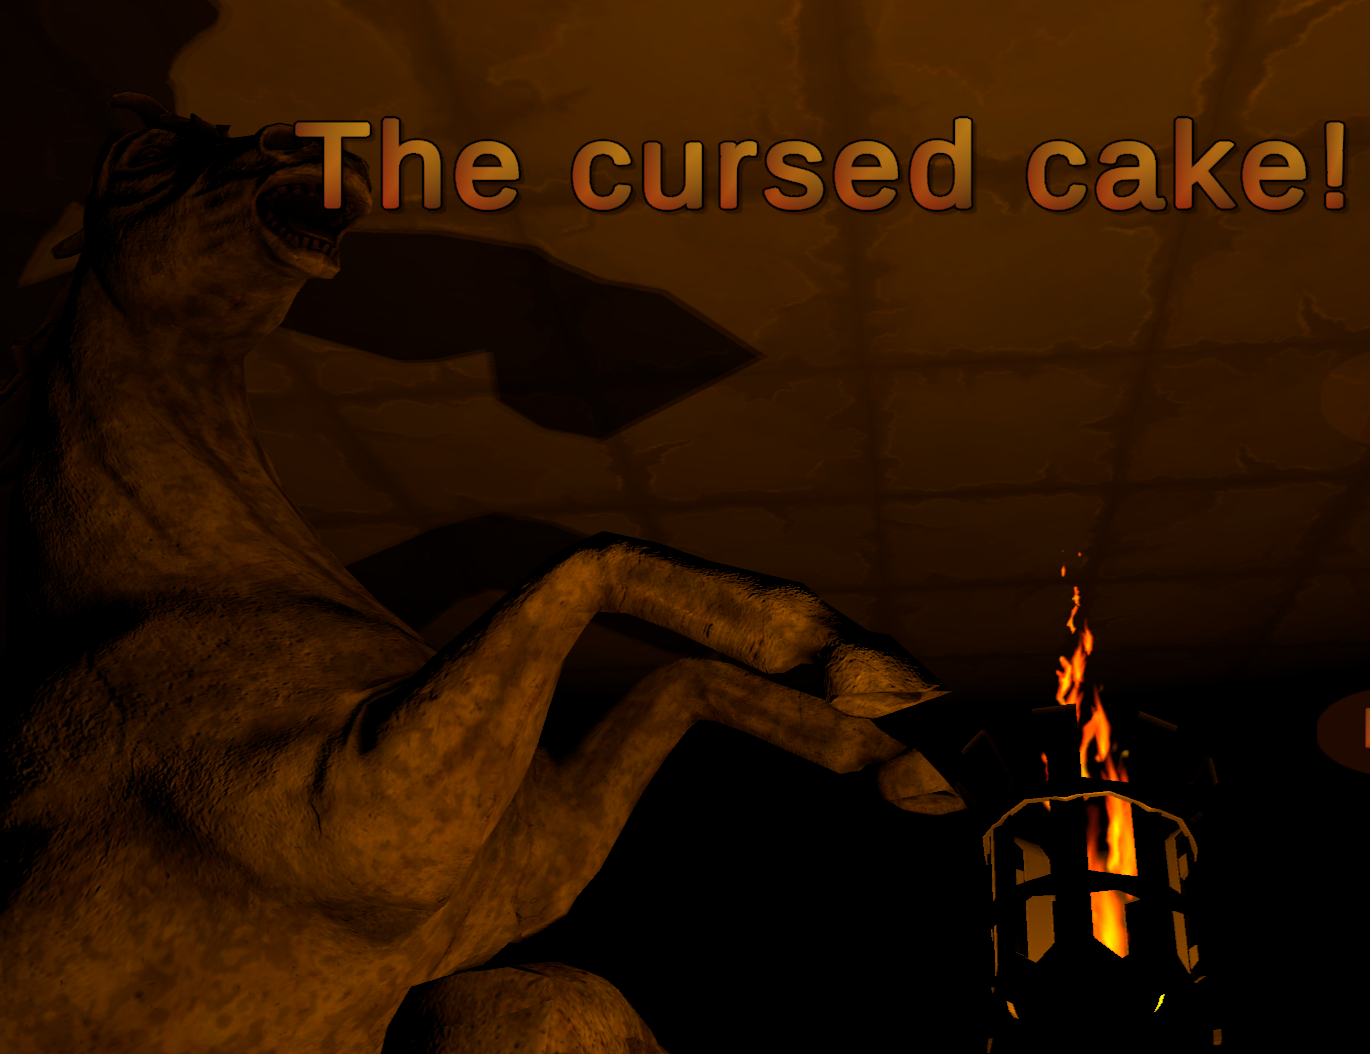 The cursed cake!